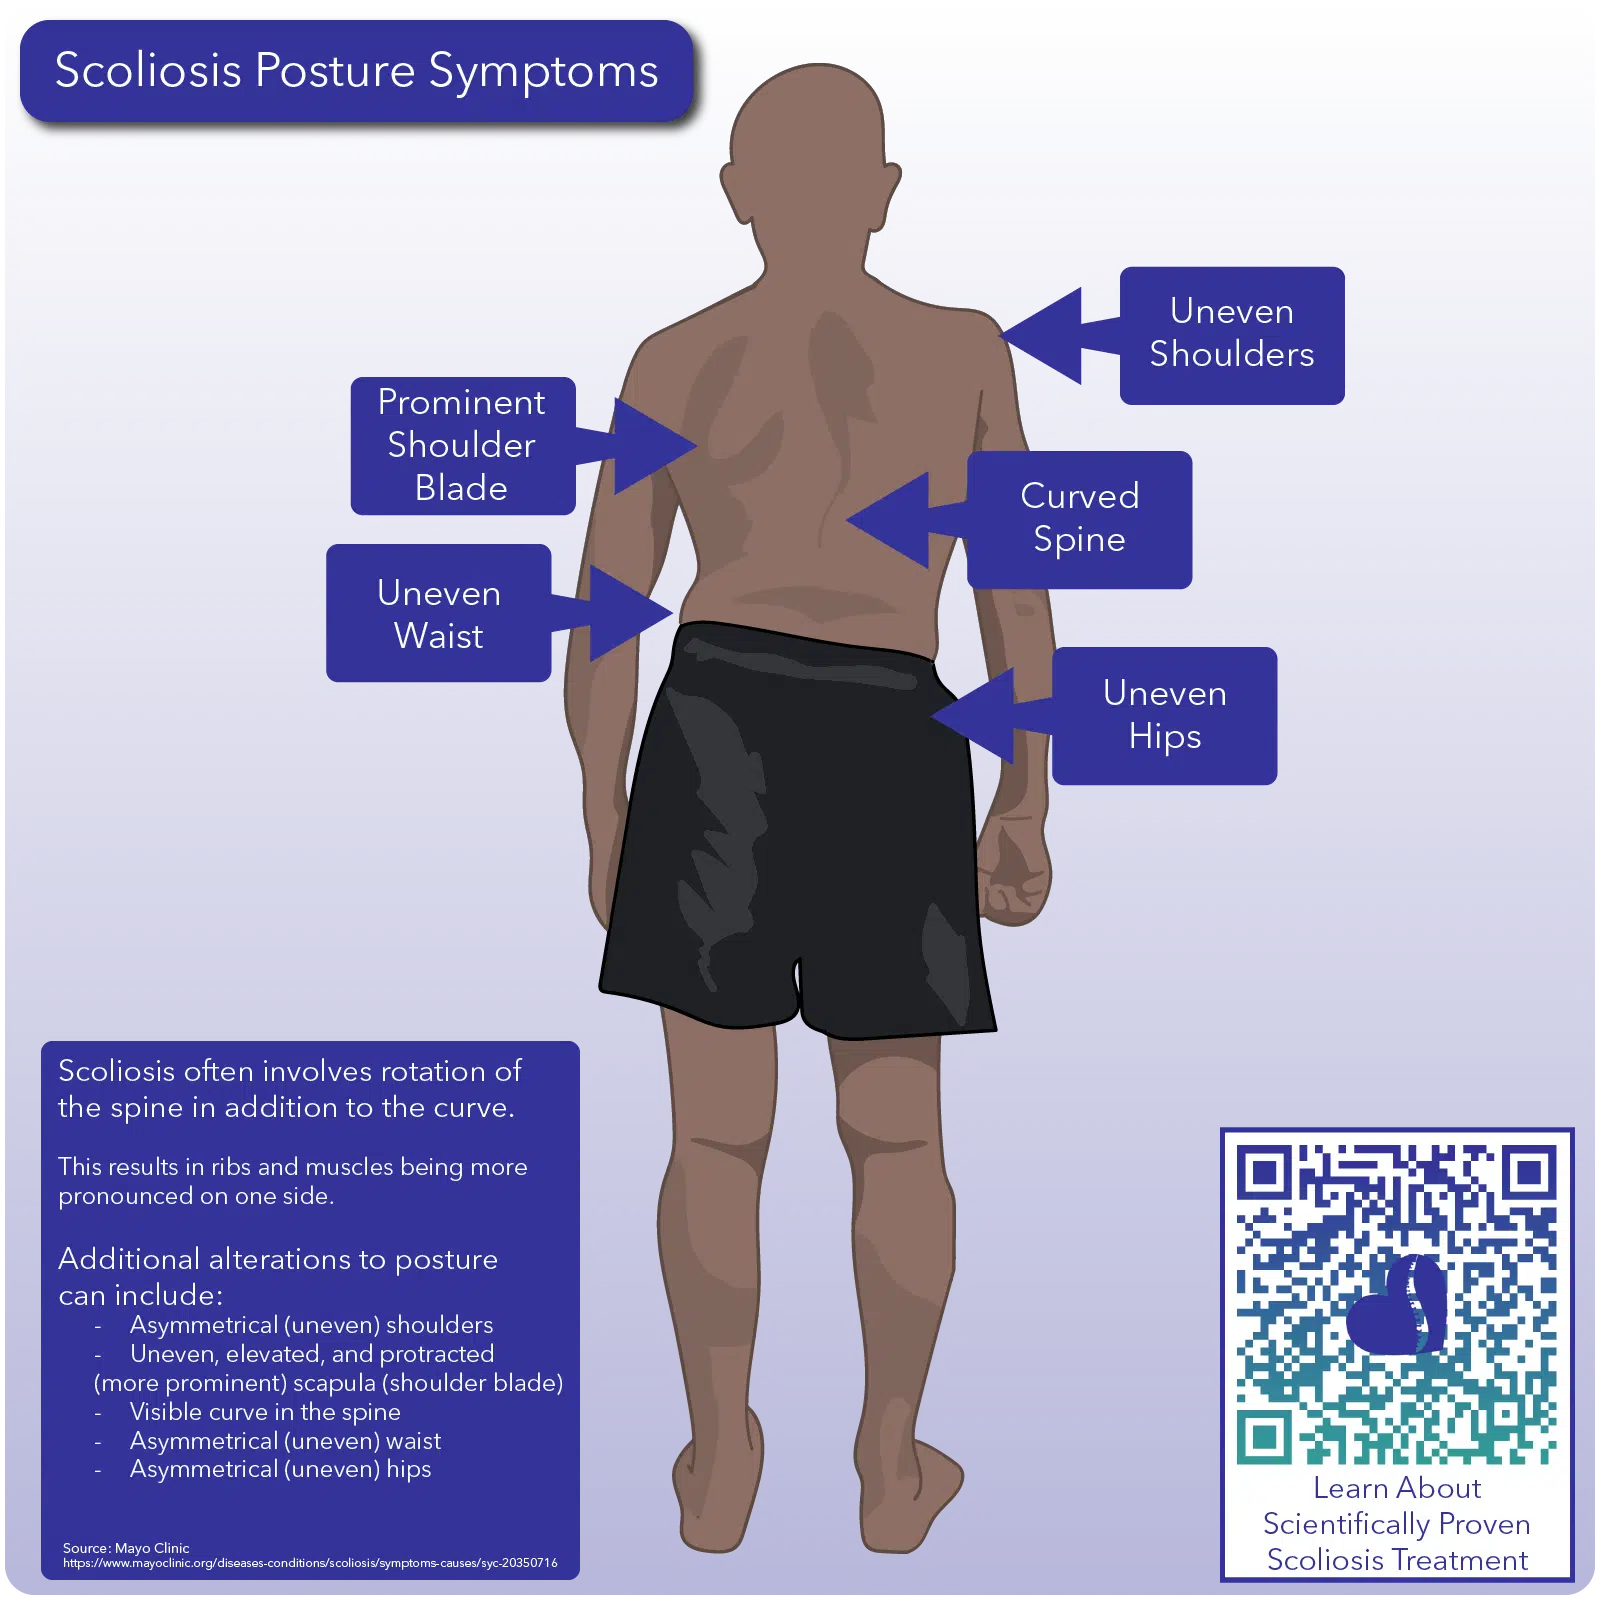 Scoliosis Posture Results - Scoliosis Care Centers